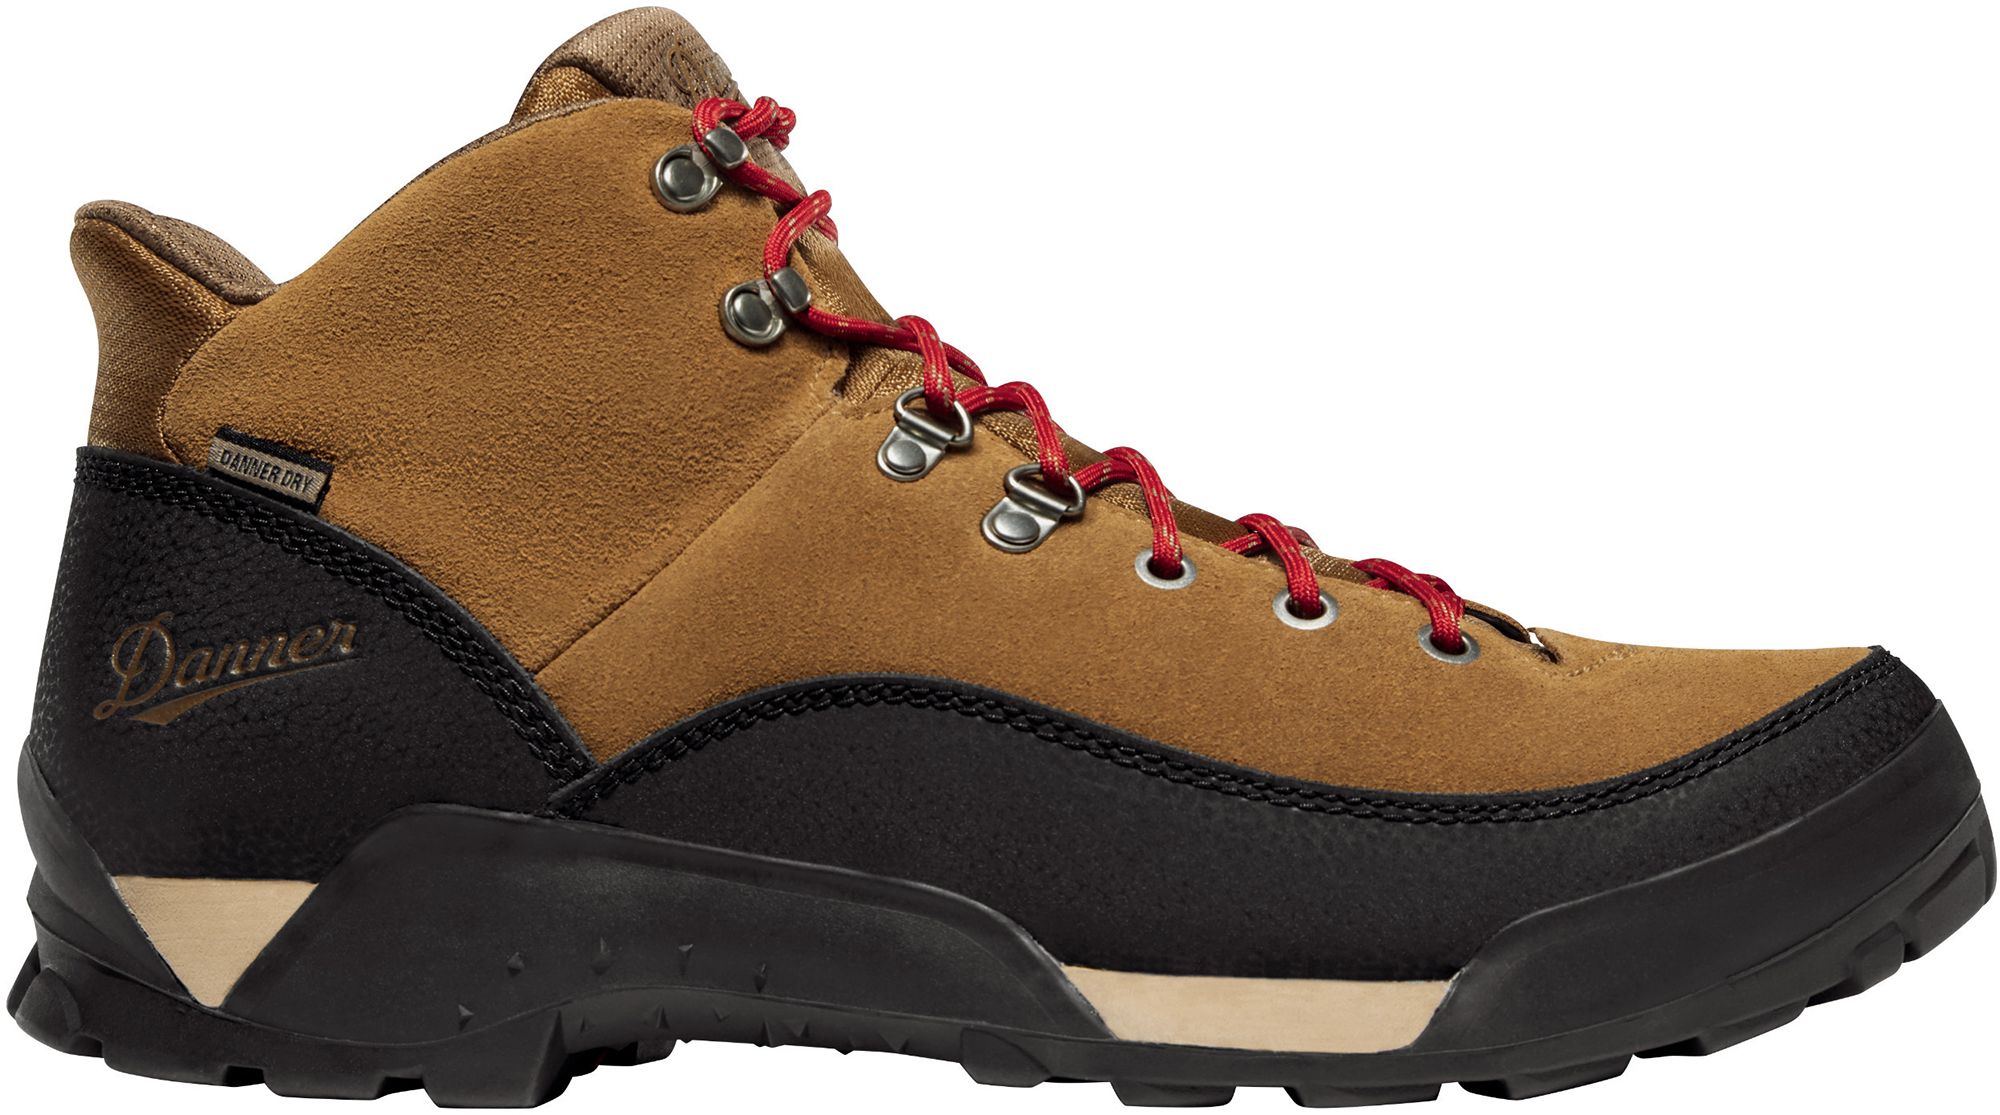 Photos - Trekking Shoes Danner Men's Panorama 6" Waterproof Hiking Boots, Size 11, Brown/Red 22DAN 